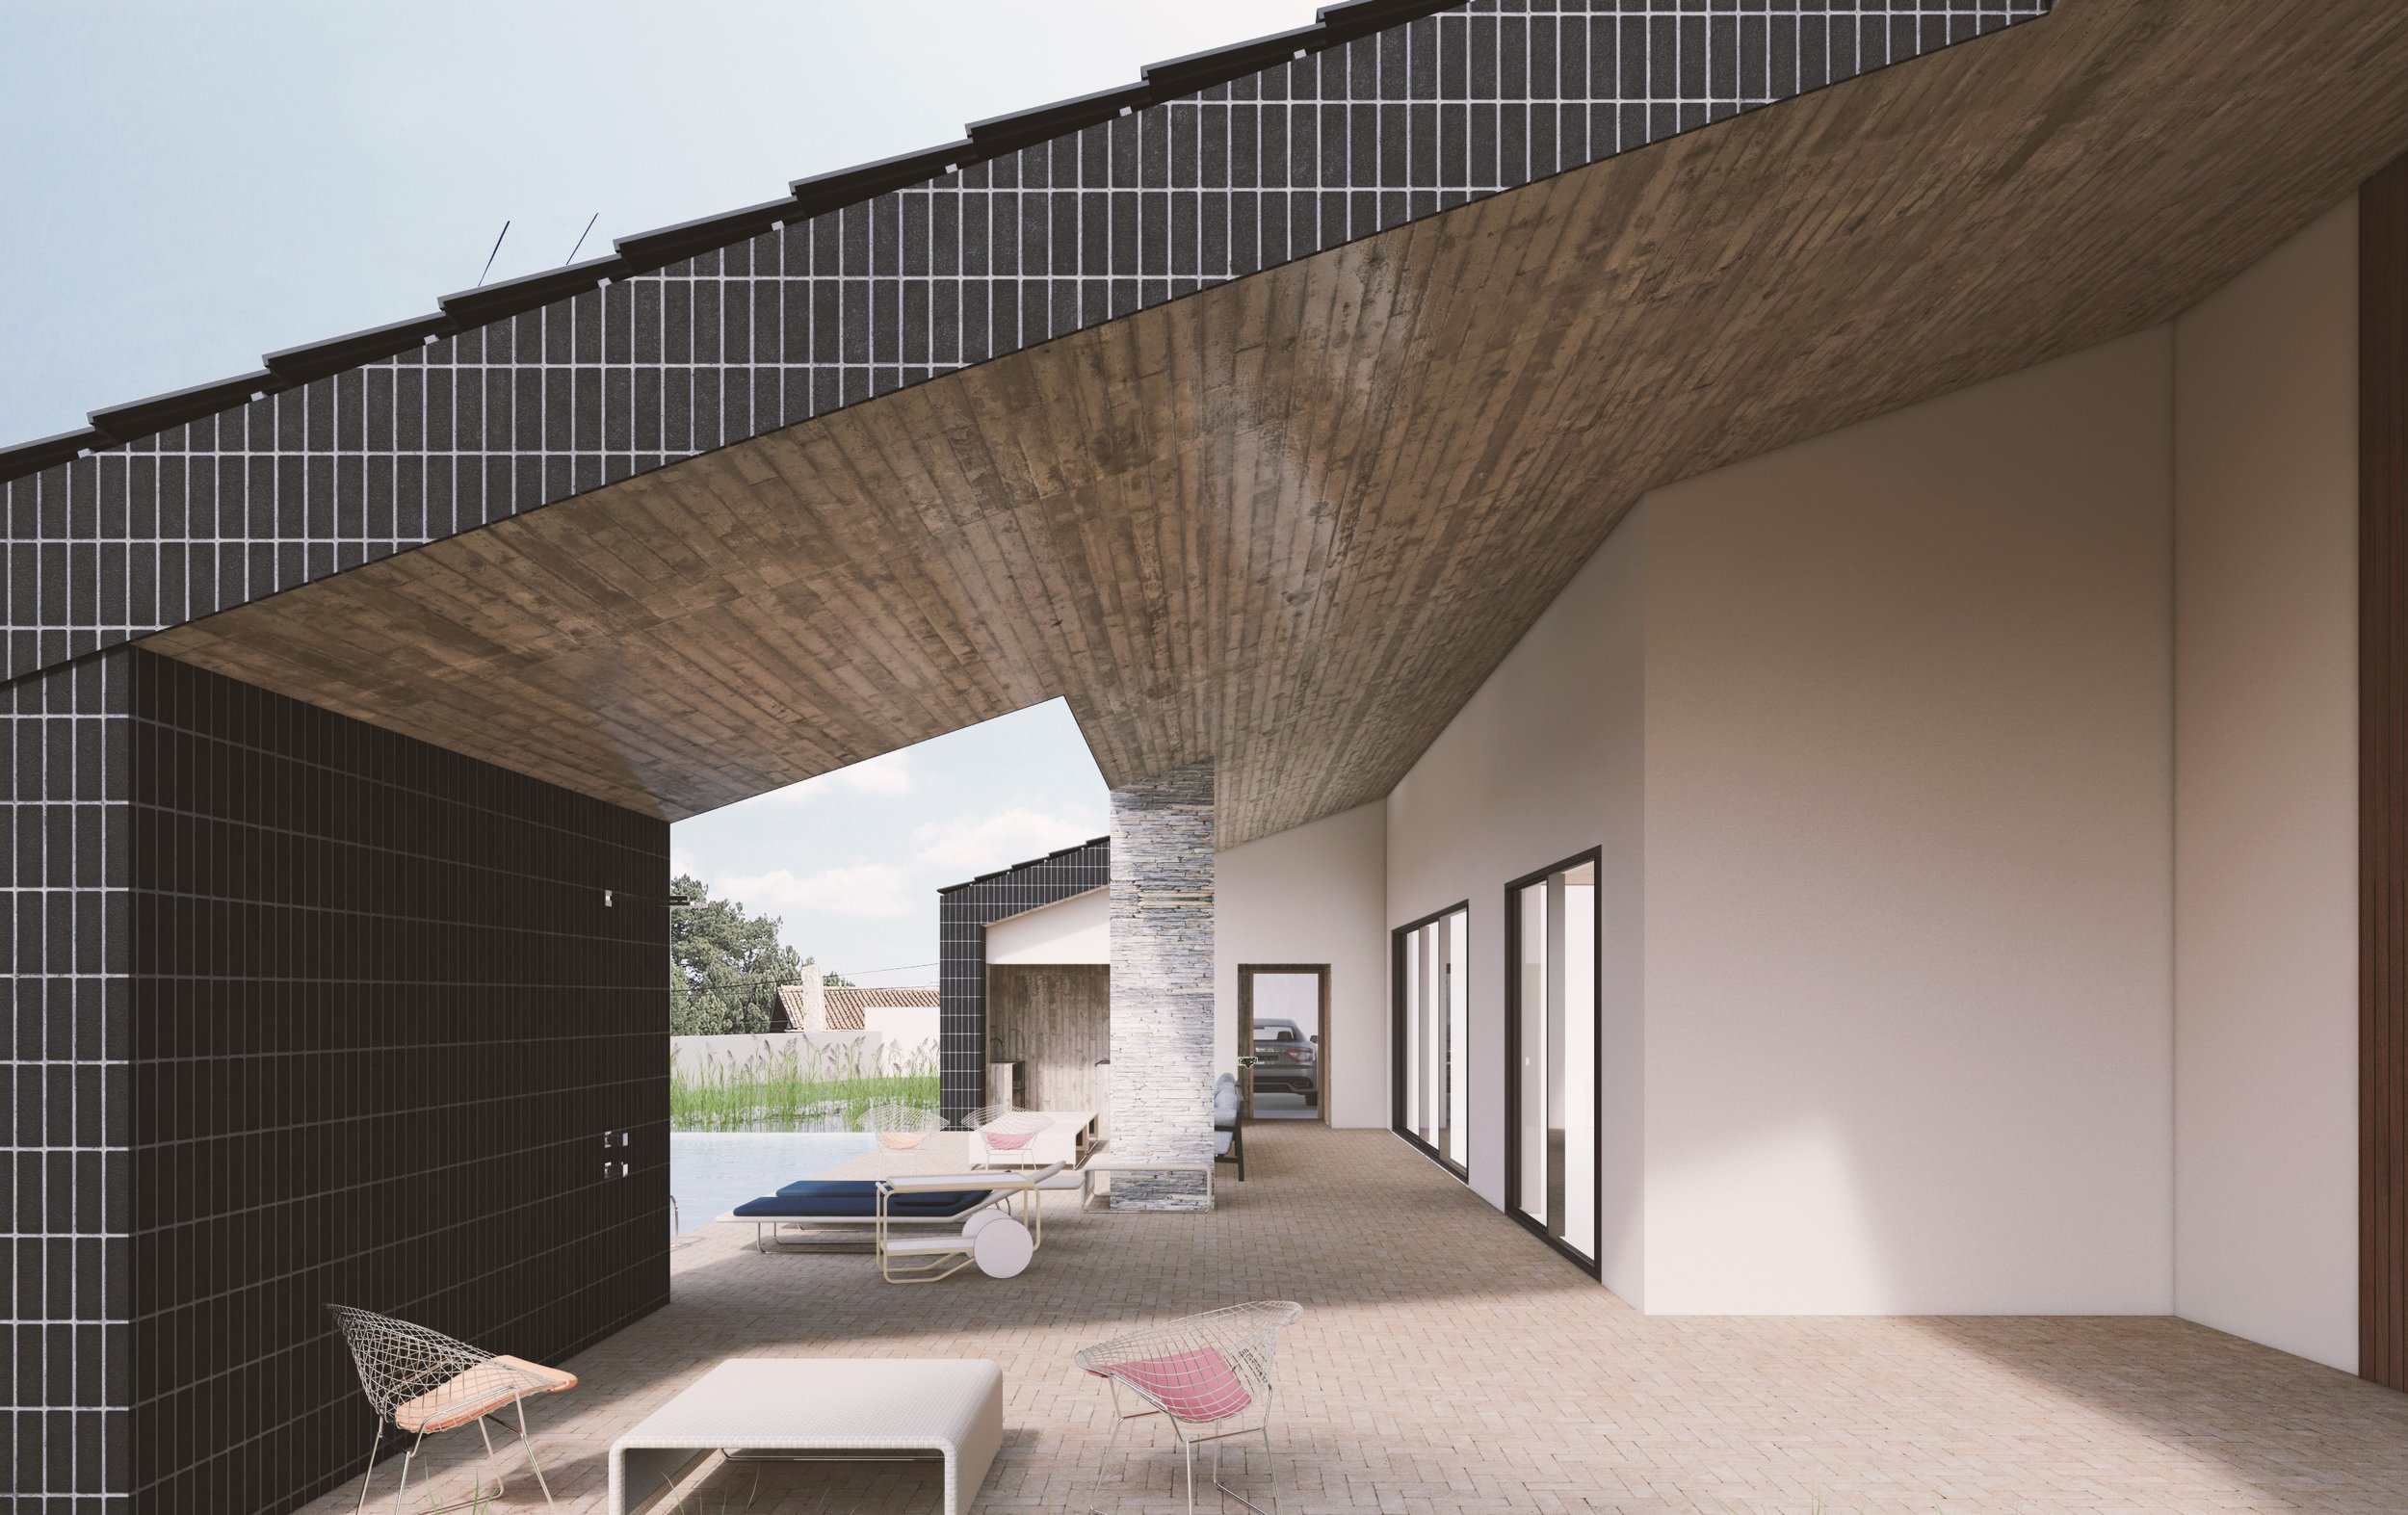 Moradia Sakura - eva atelier - arquitectura - projecto - oliveira de azeméis - arquitectos - porto (18).jpg